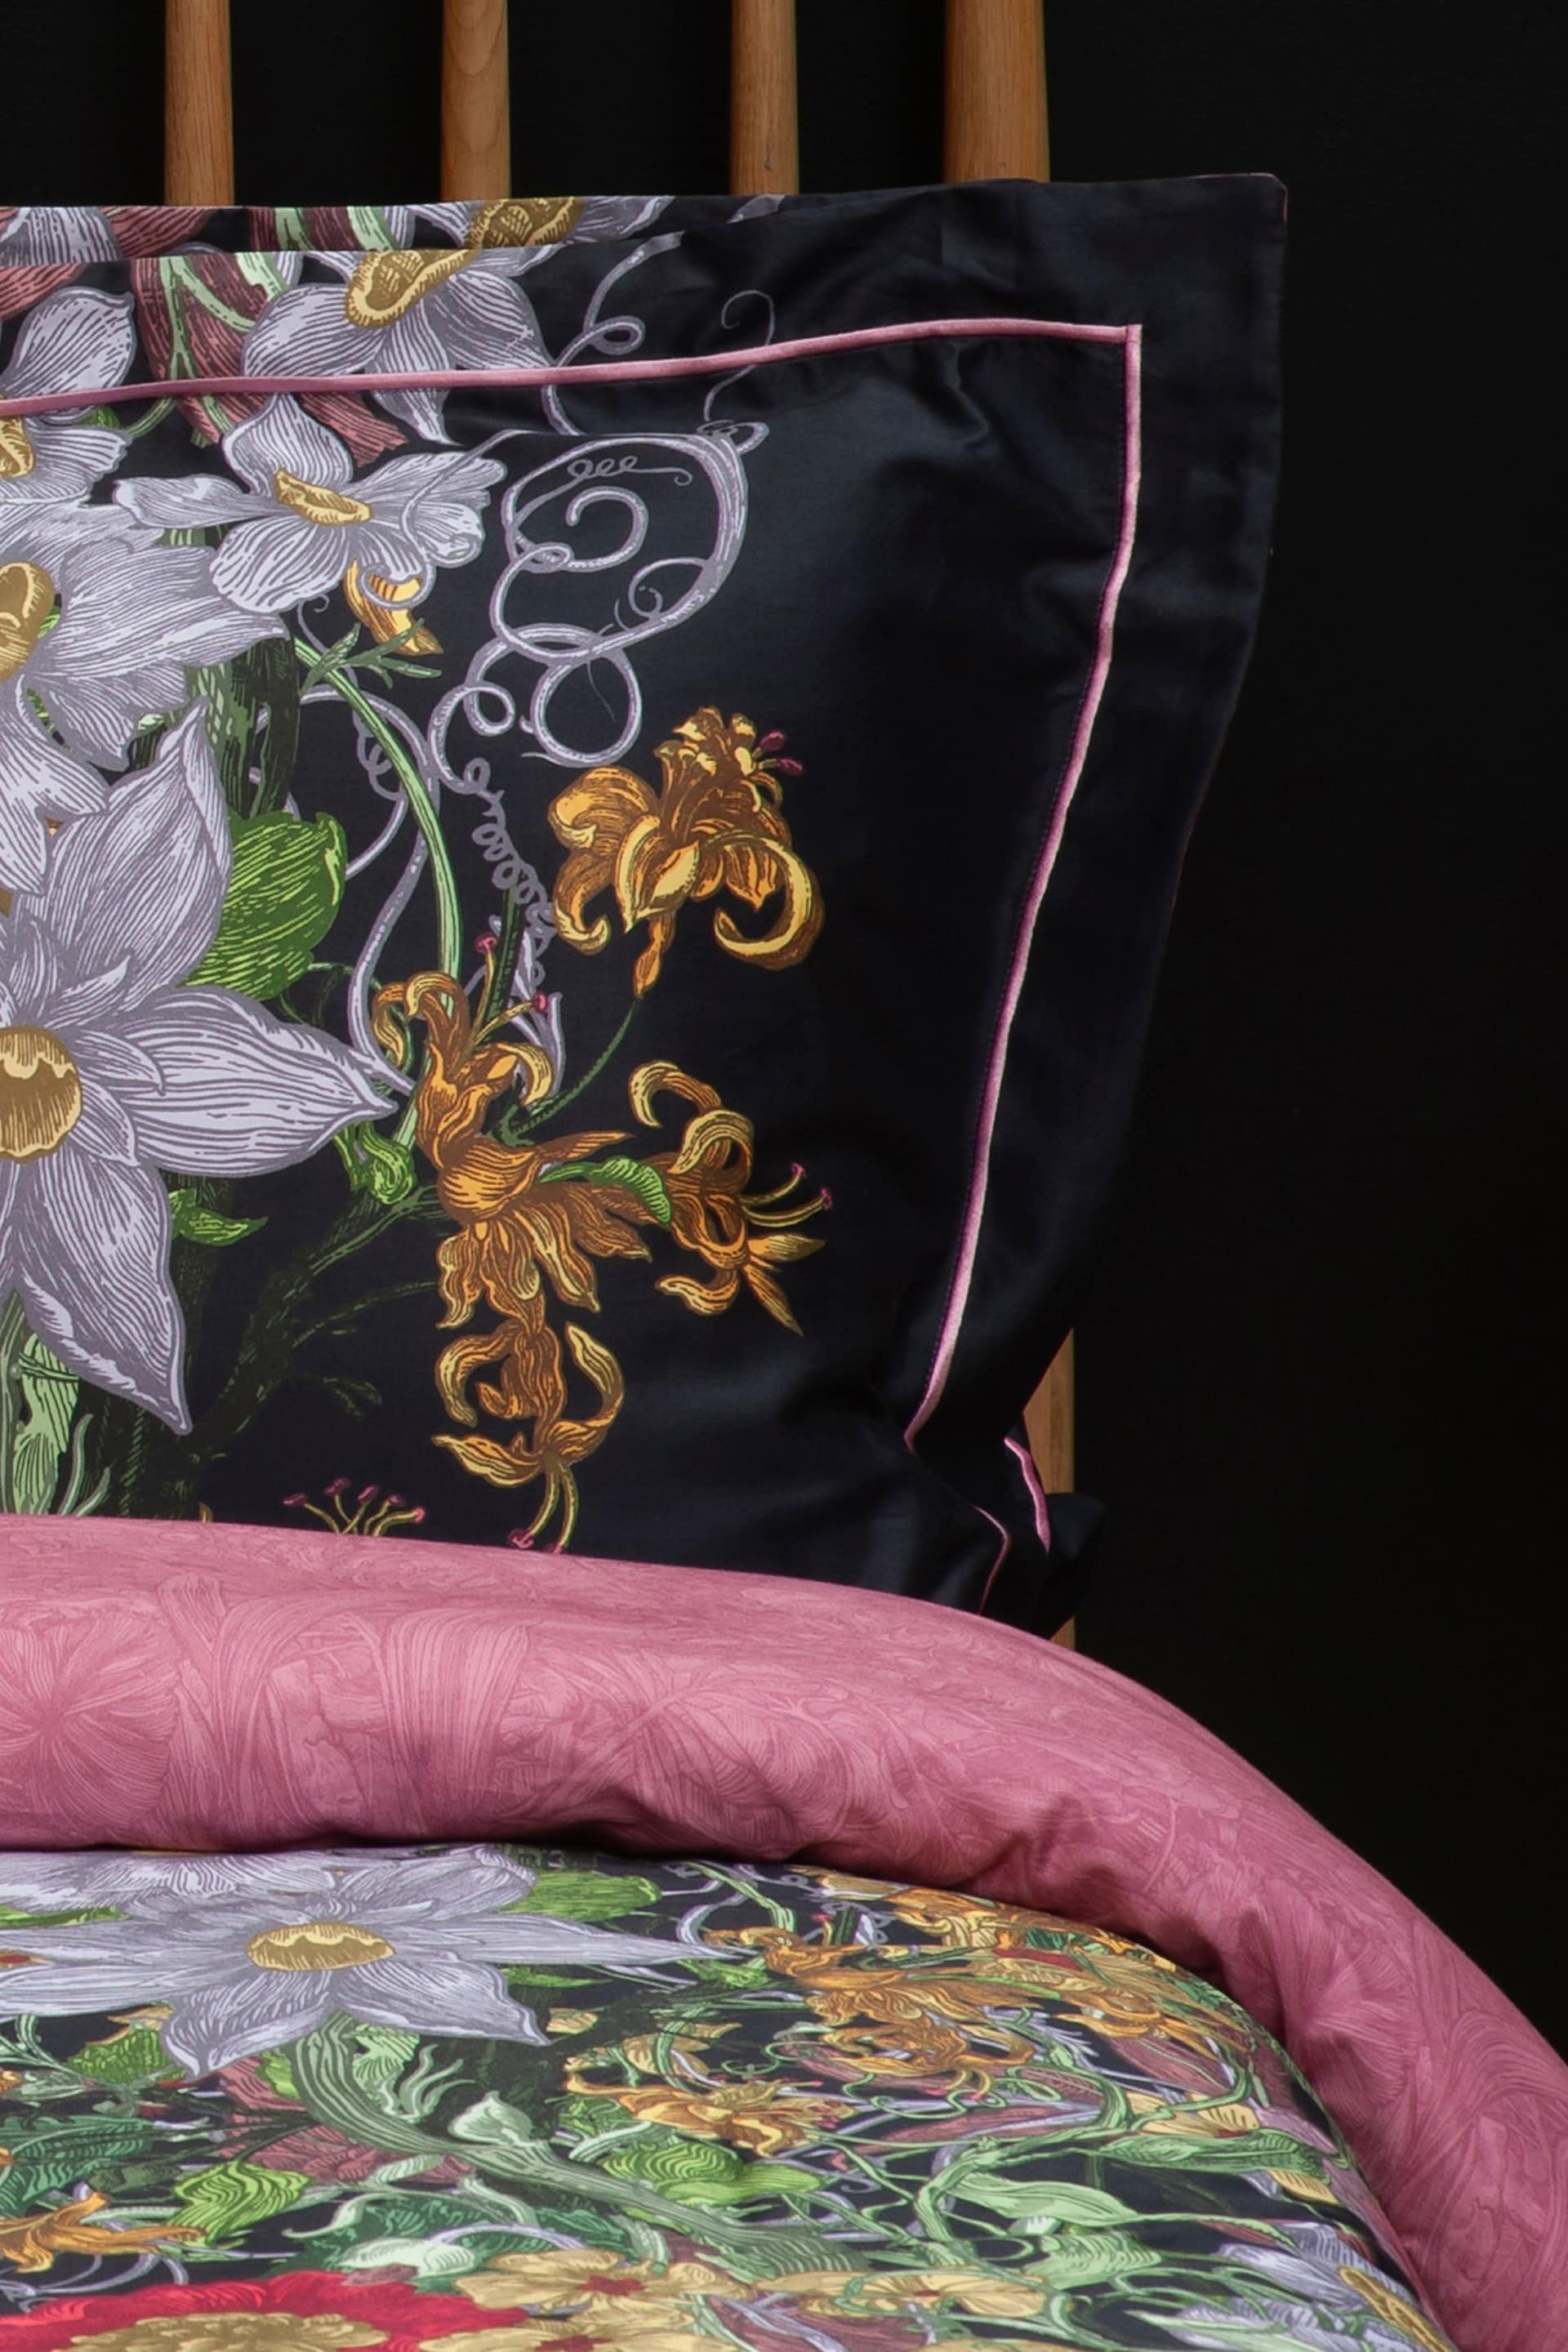 Timorous Beasties Midnight Berkeley Blooms Duvet Cover and Pillowcase Set - Image 2 of 8